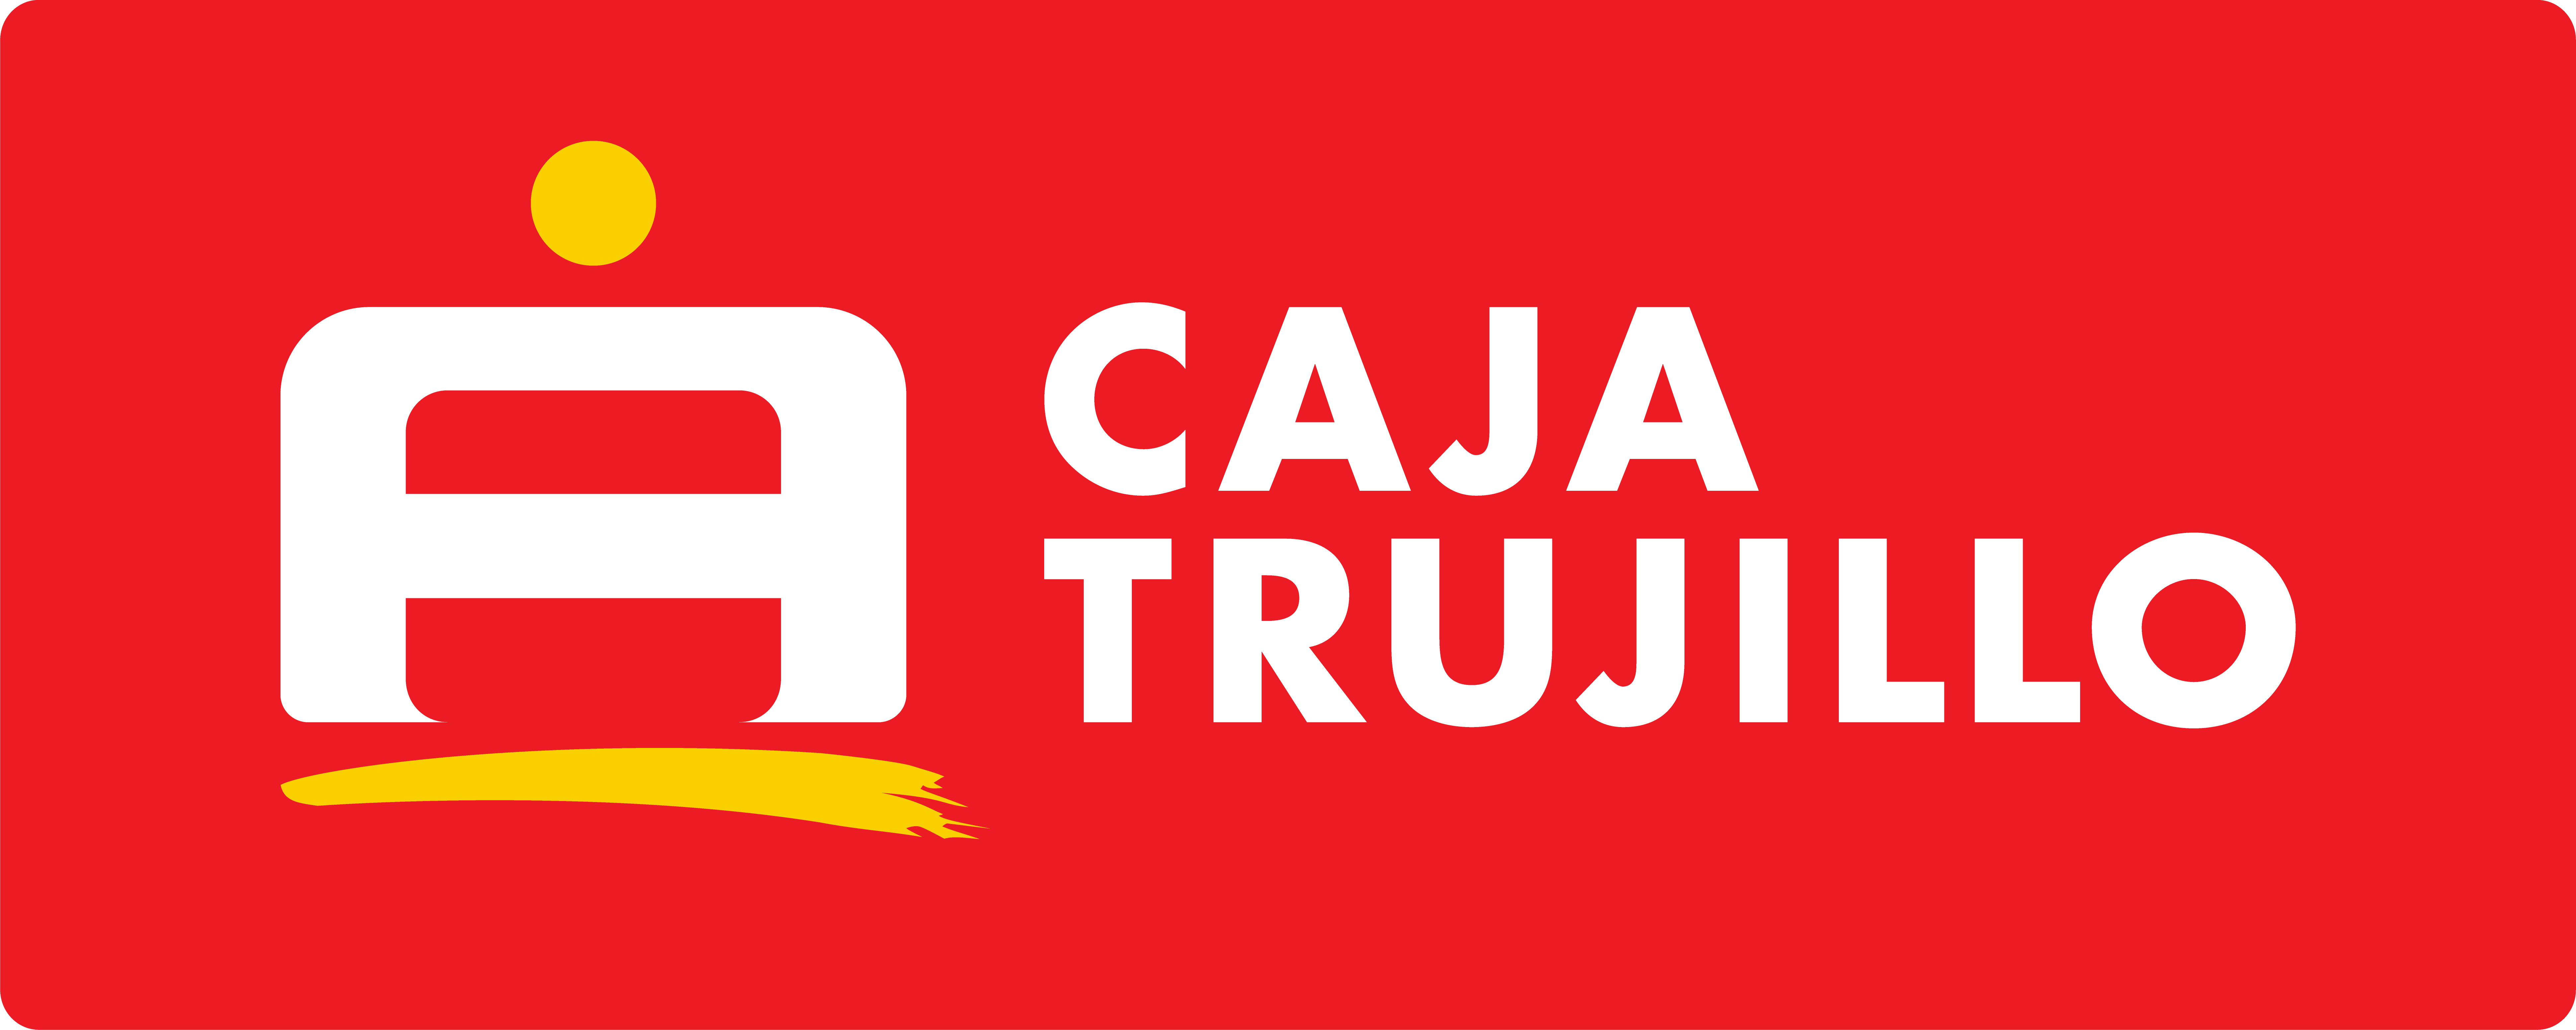 Download vector logo Caja Trujillo Free